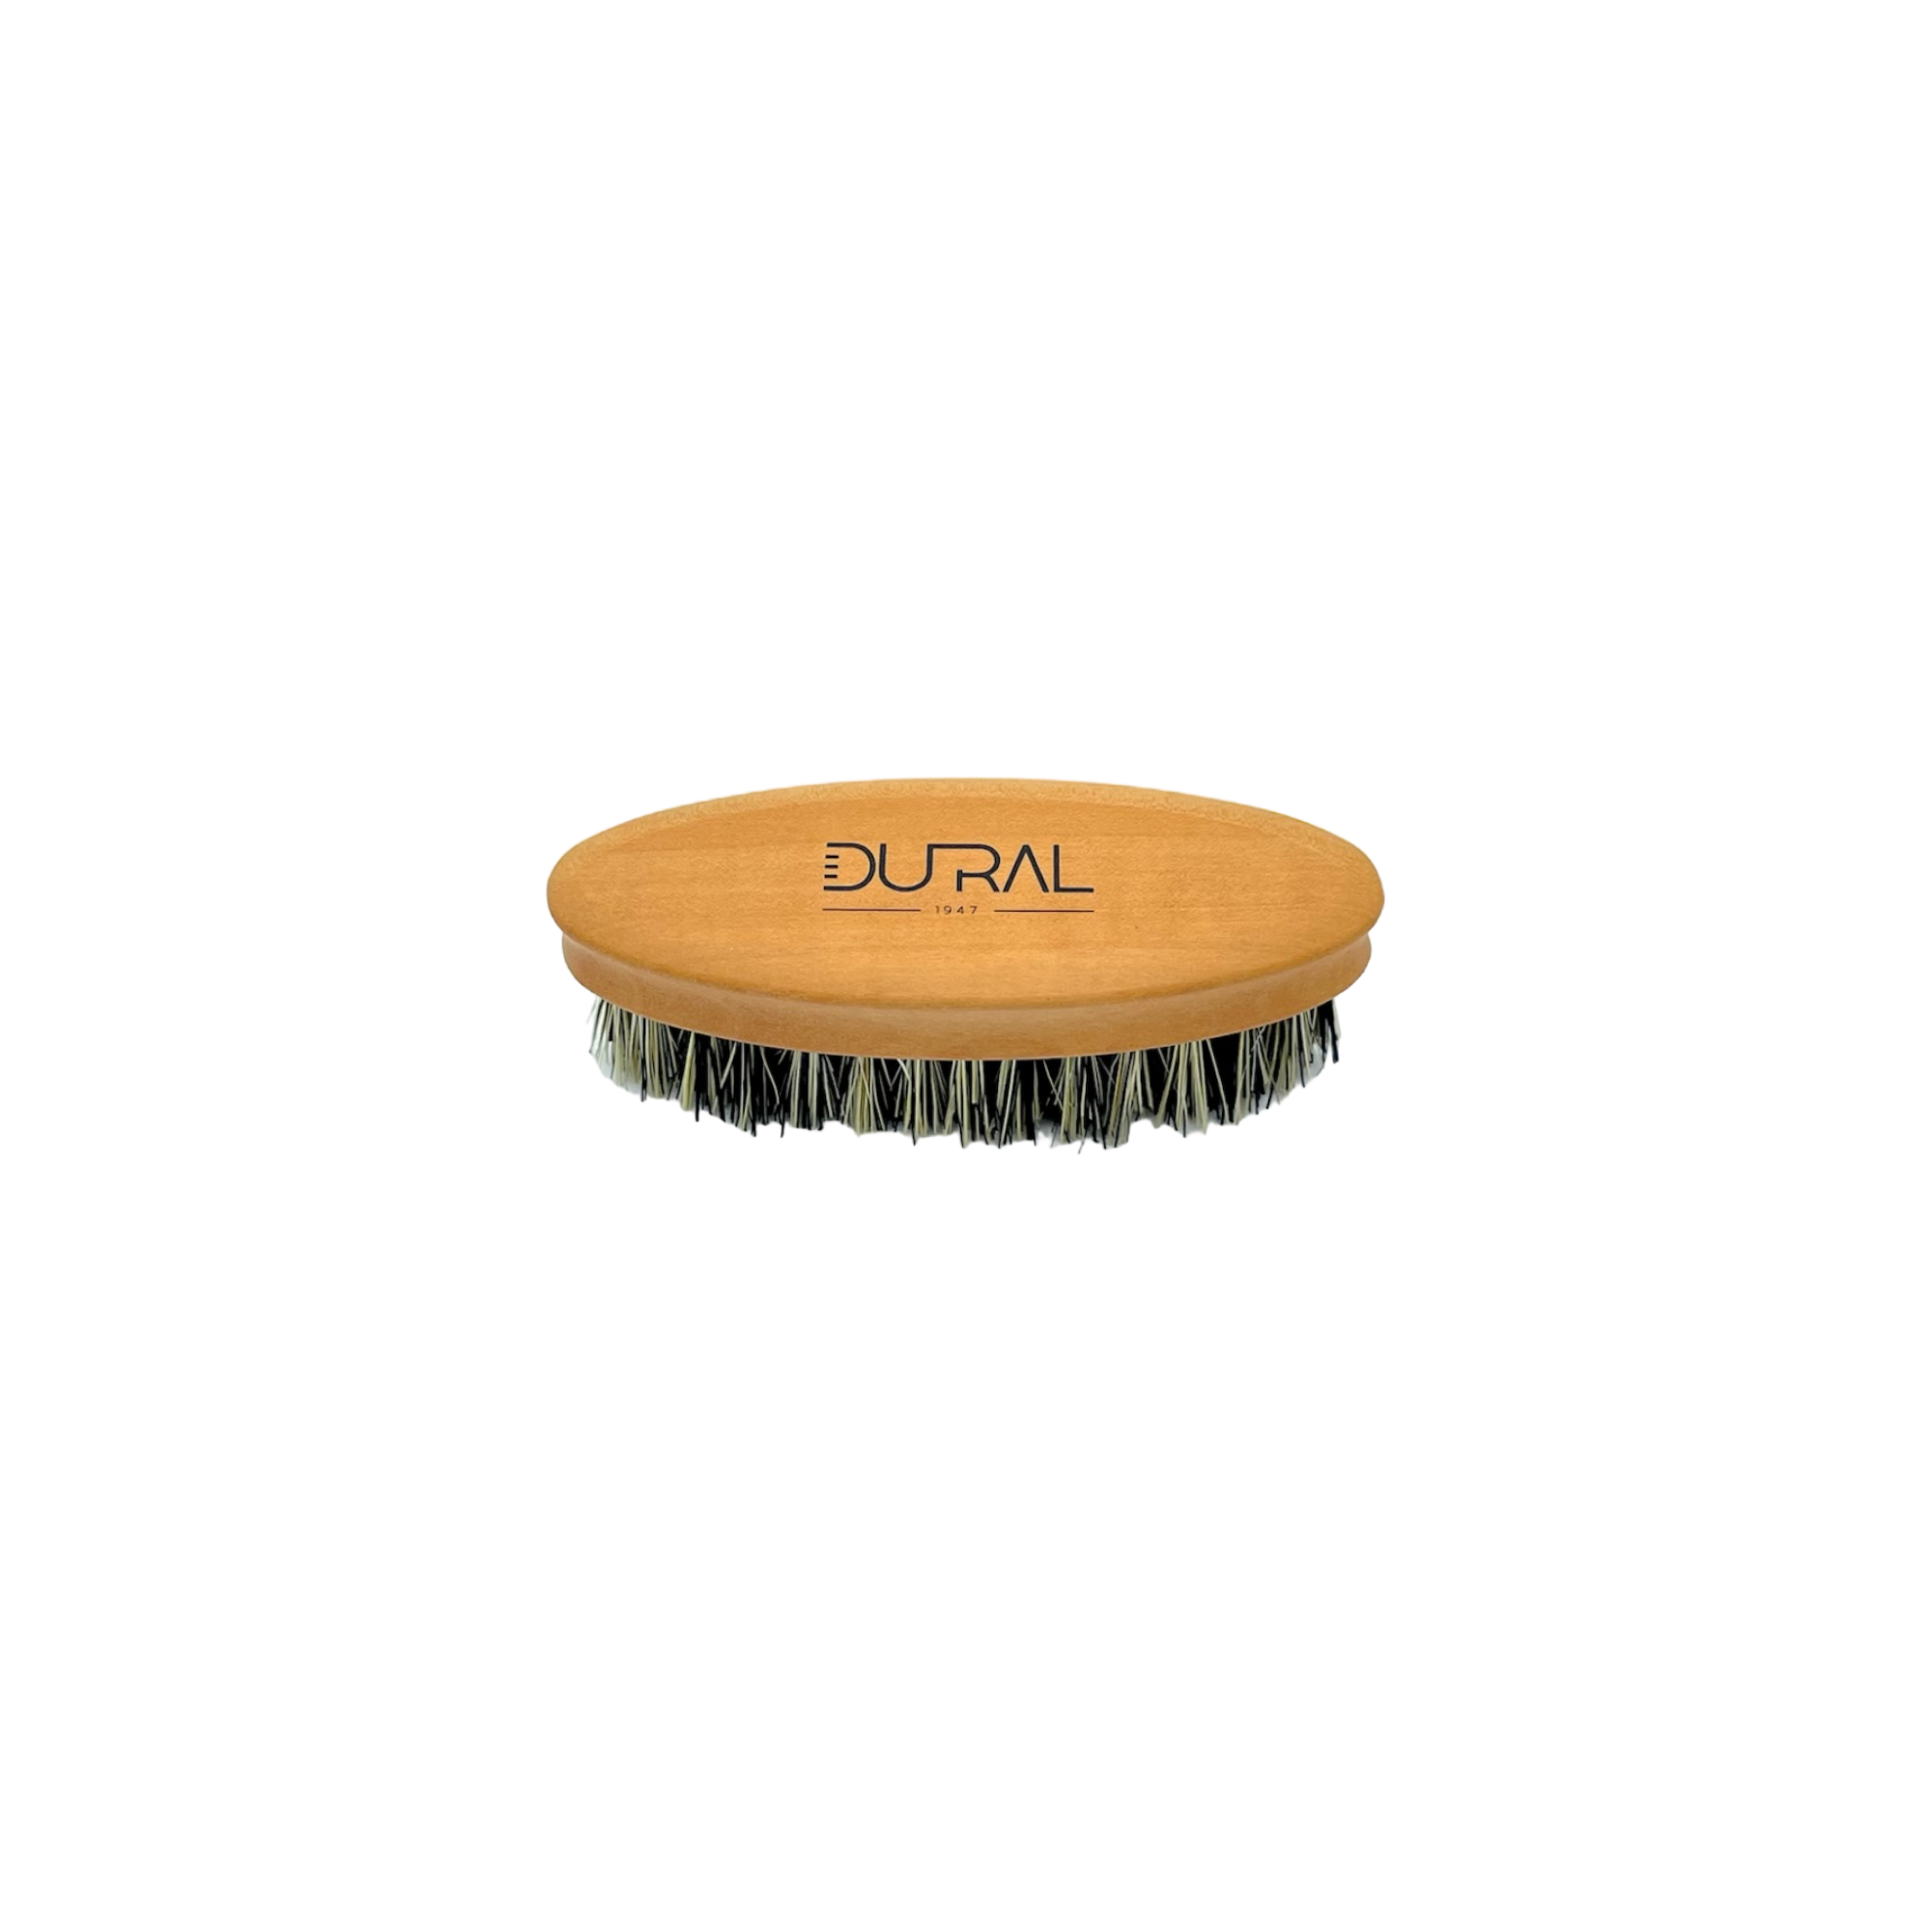 Dural Pear wood beard brush with pure Tampico fiber - Halal compliant & Vegan